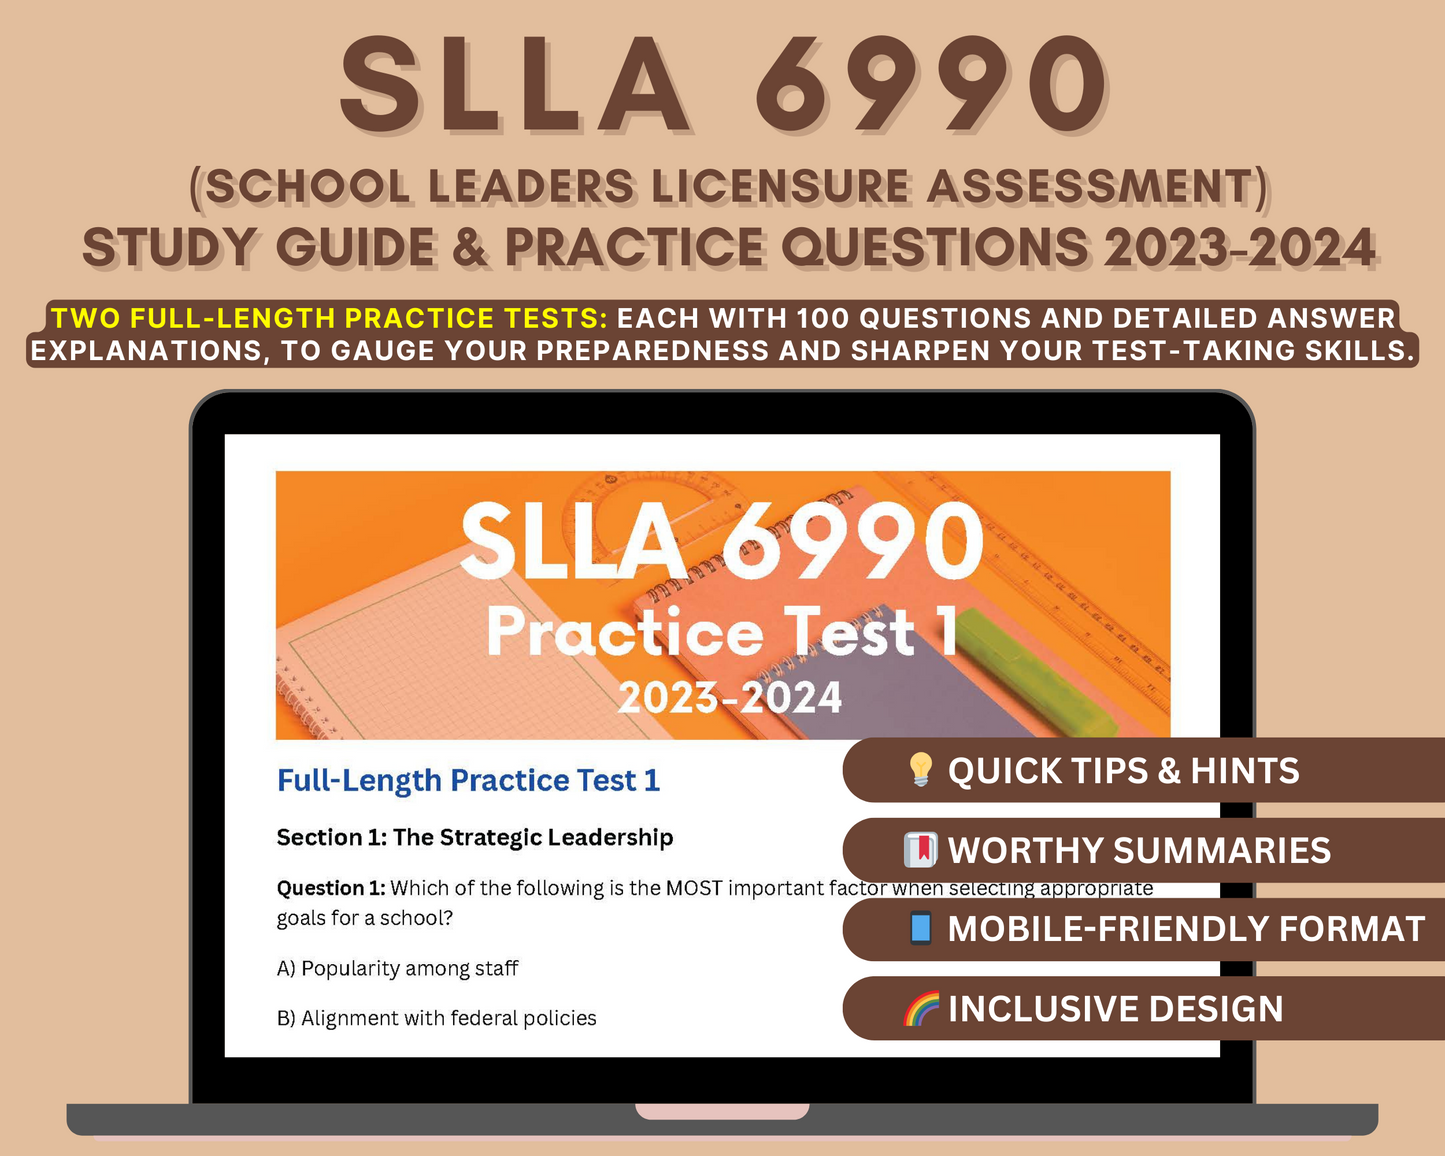 SLLA 6990 Exam Prep Study Guide 2023-2024: Educational Leadership Success - Study, Practice, Succeed!